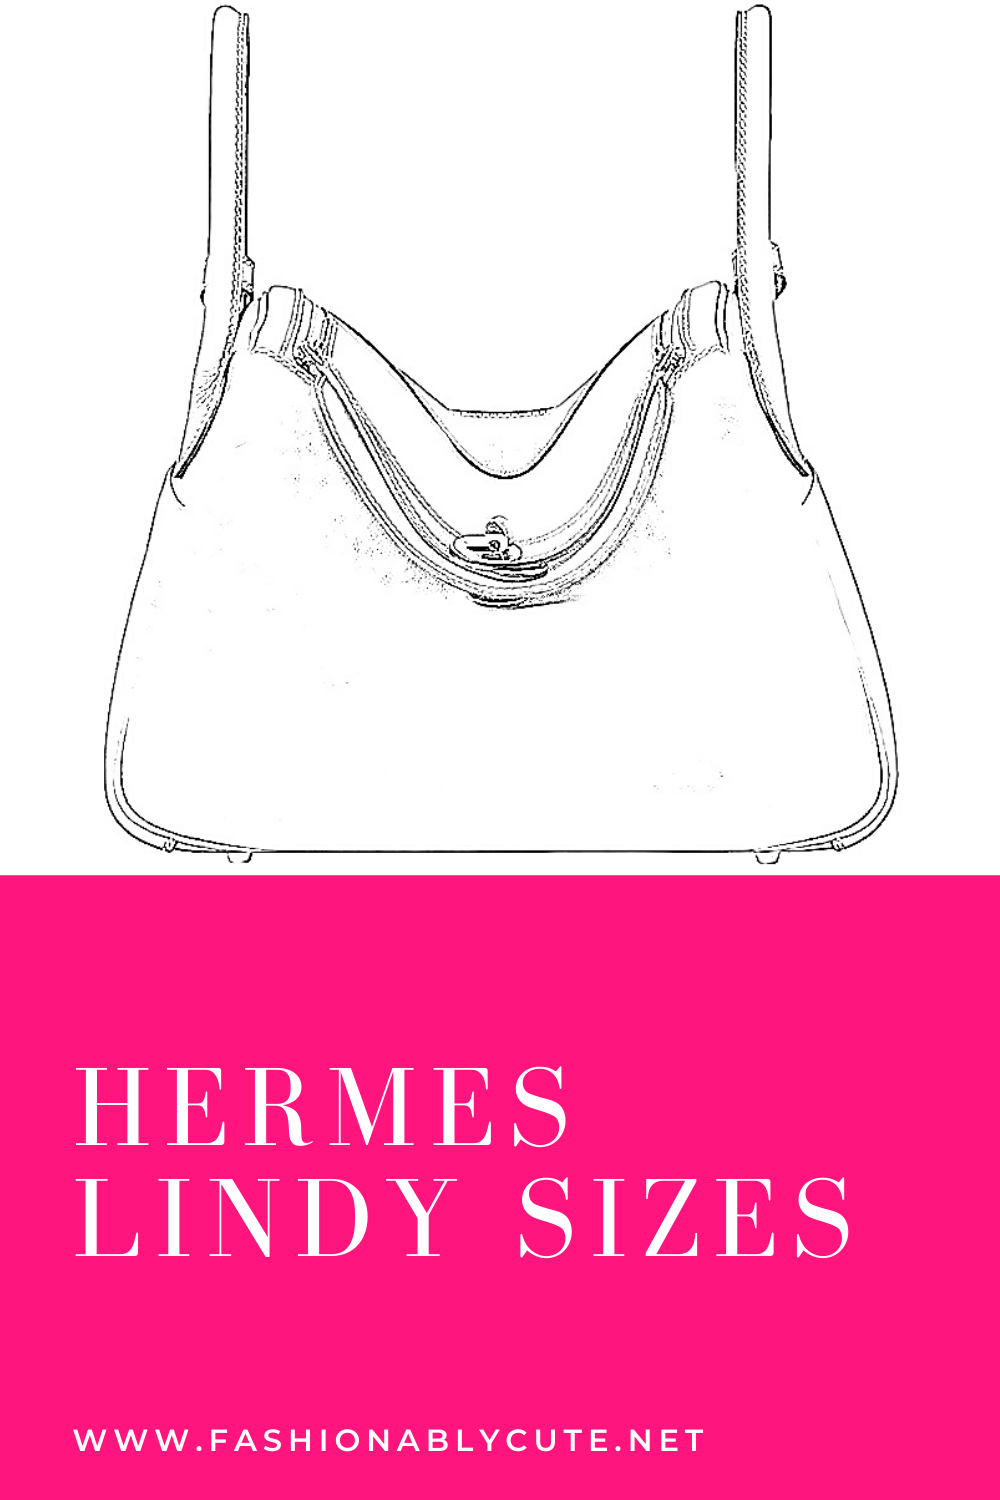 Hermes Lindy Size Comparison - Fashionably Cute